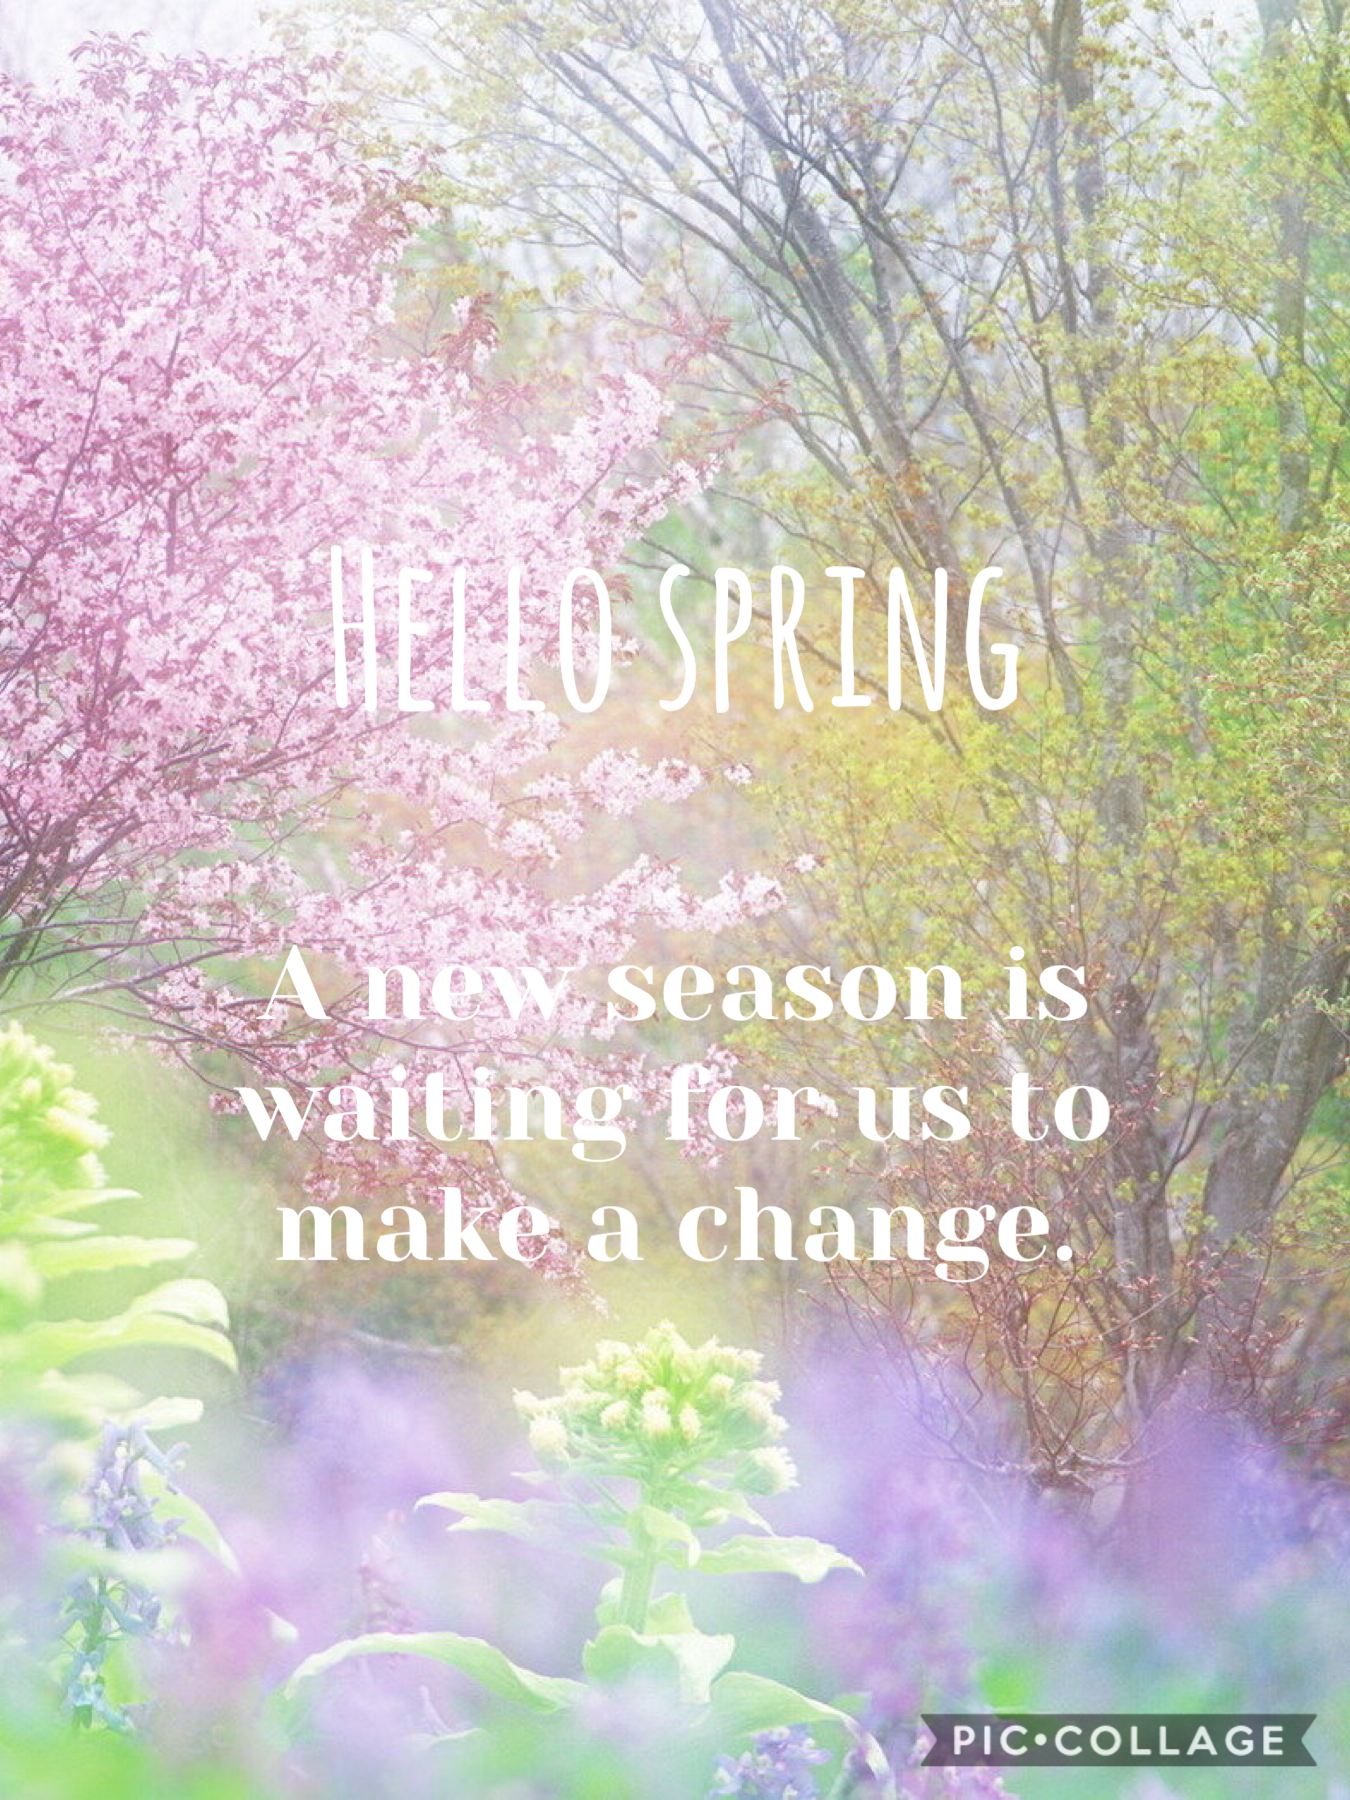 Happy Spring!!